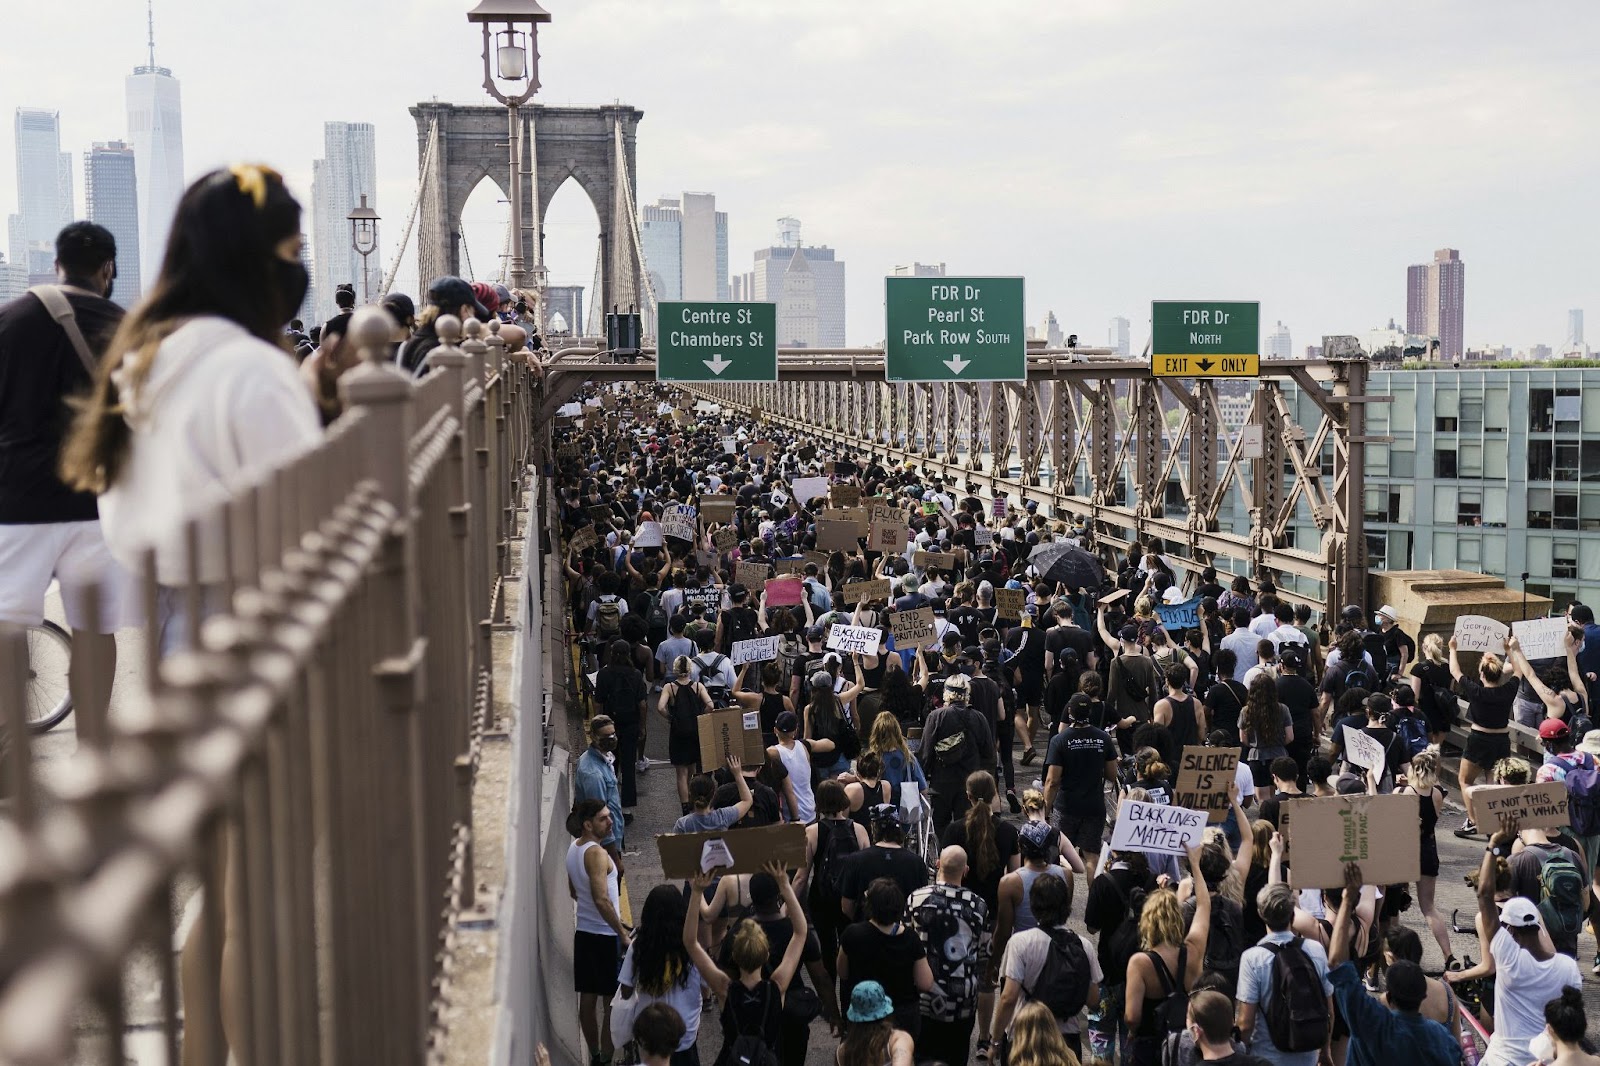 Crowds of protestors marching across the Brooklyn Bridge towards Manhattan Island